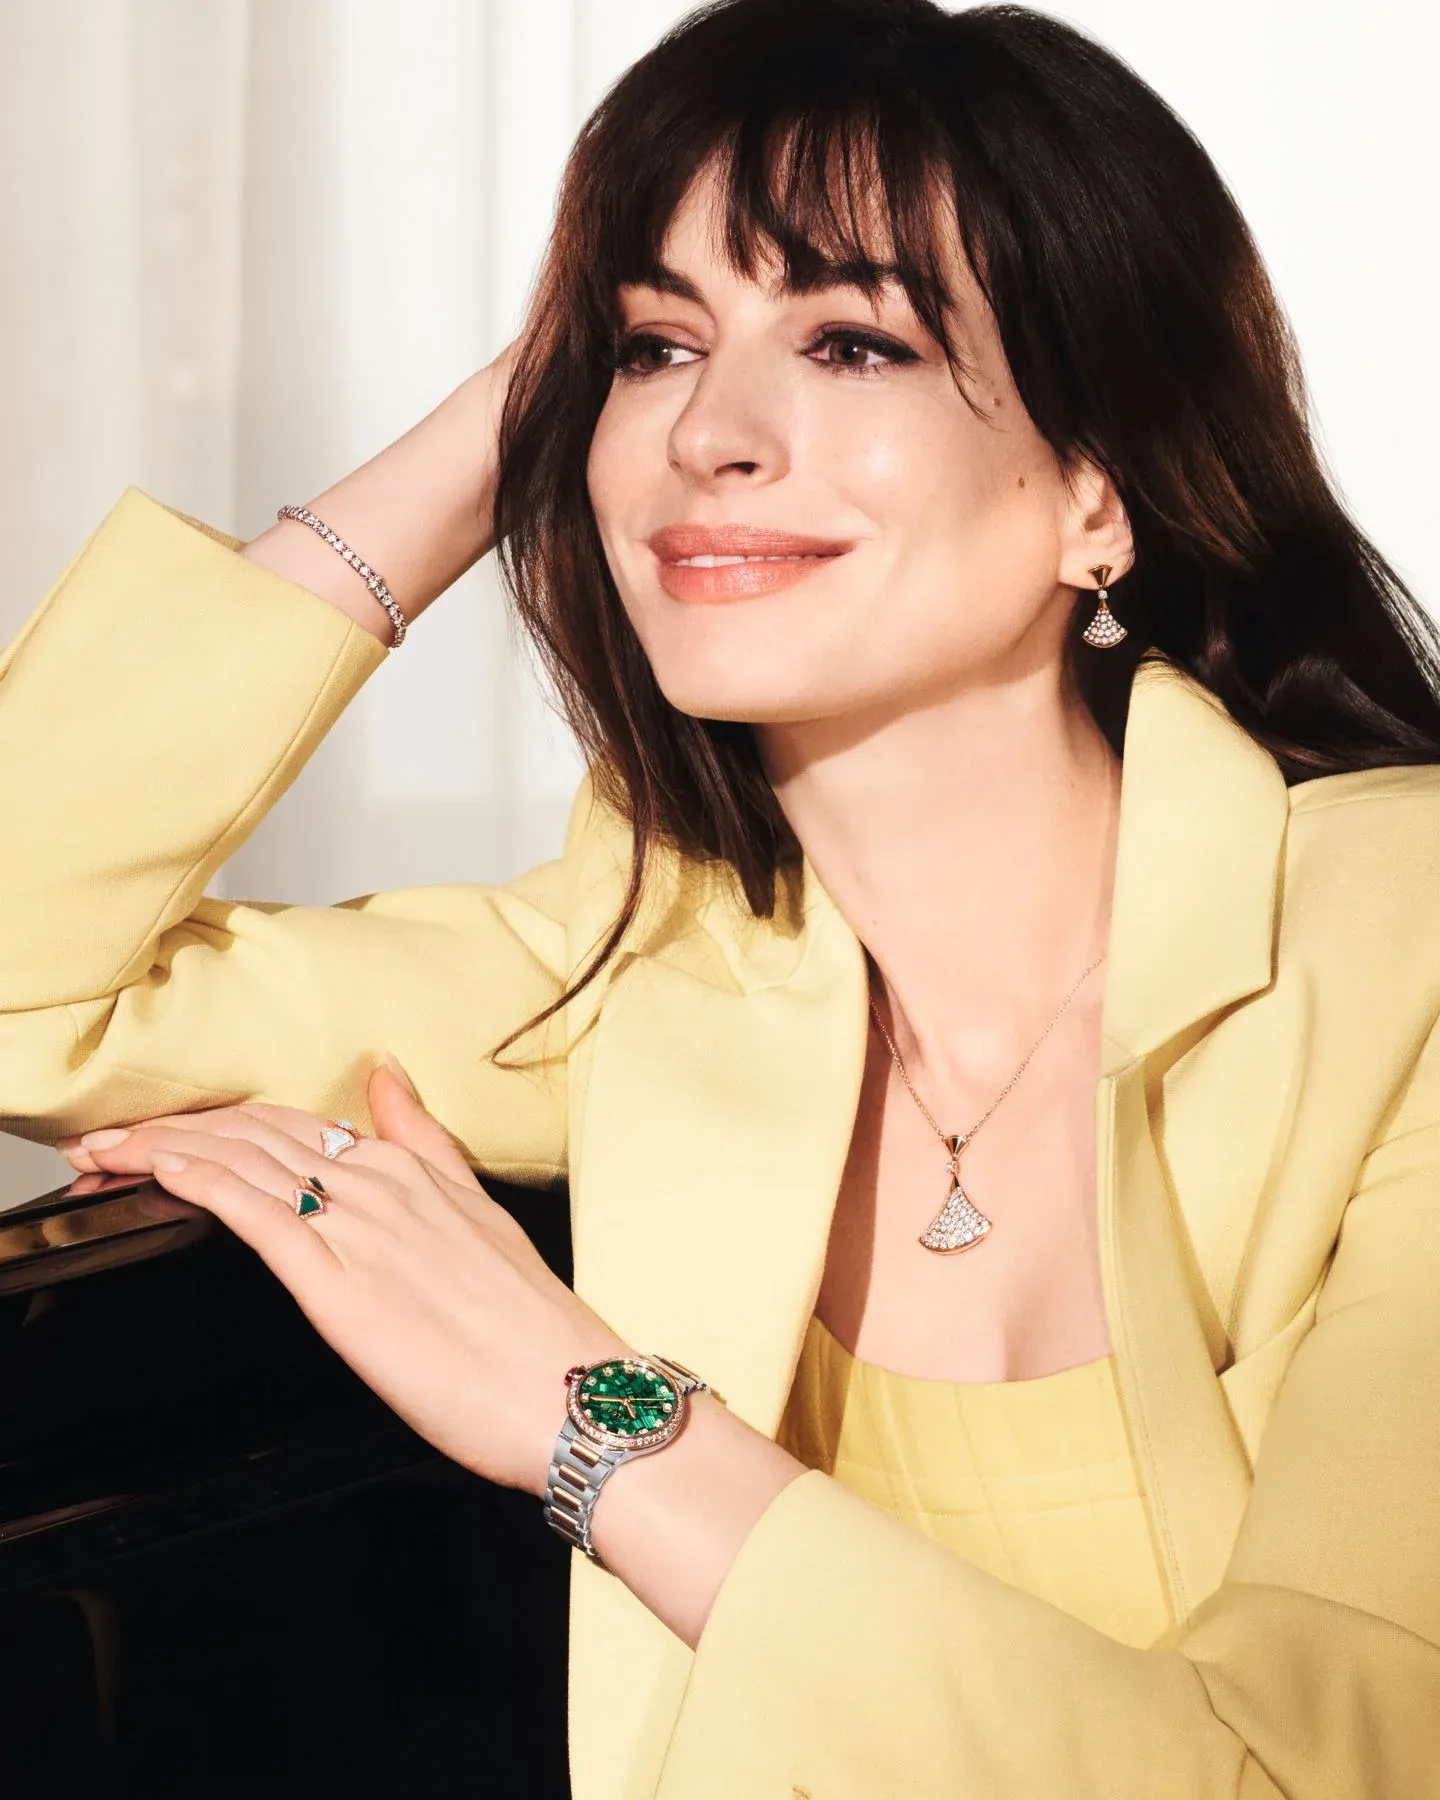 Anne Hathaway rocking the Bulgari Lucea intense malachite dial watch